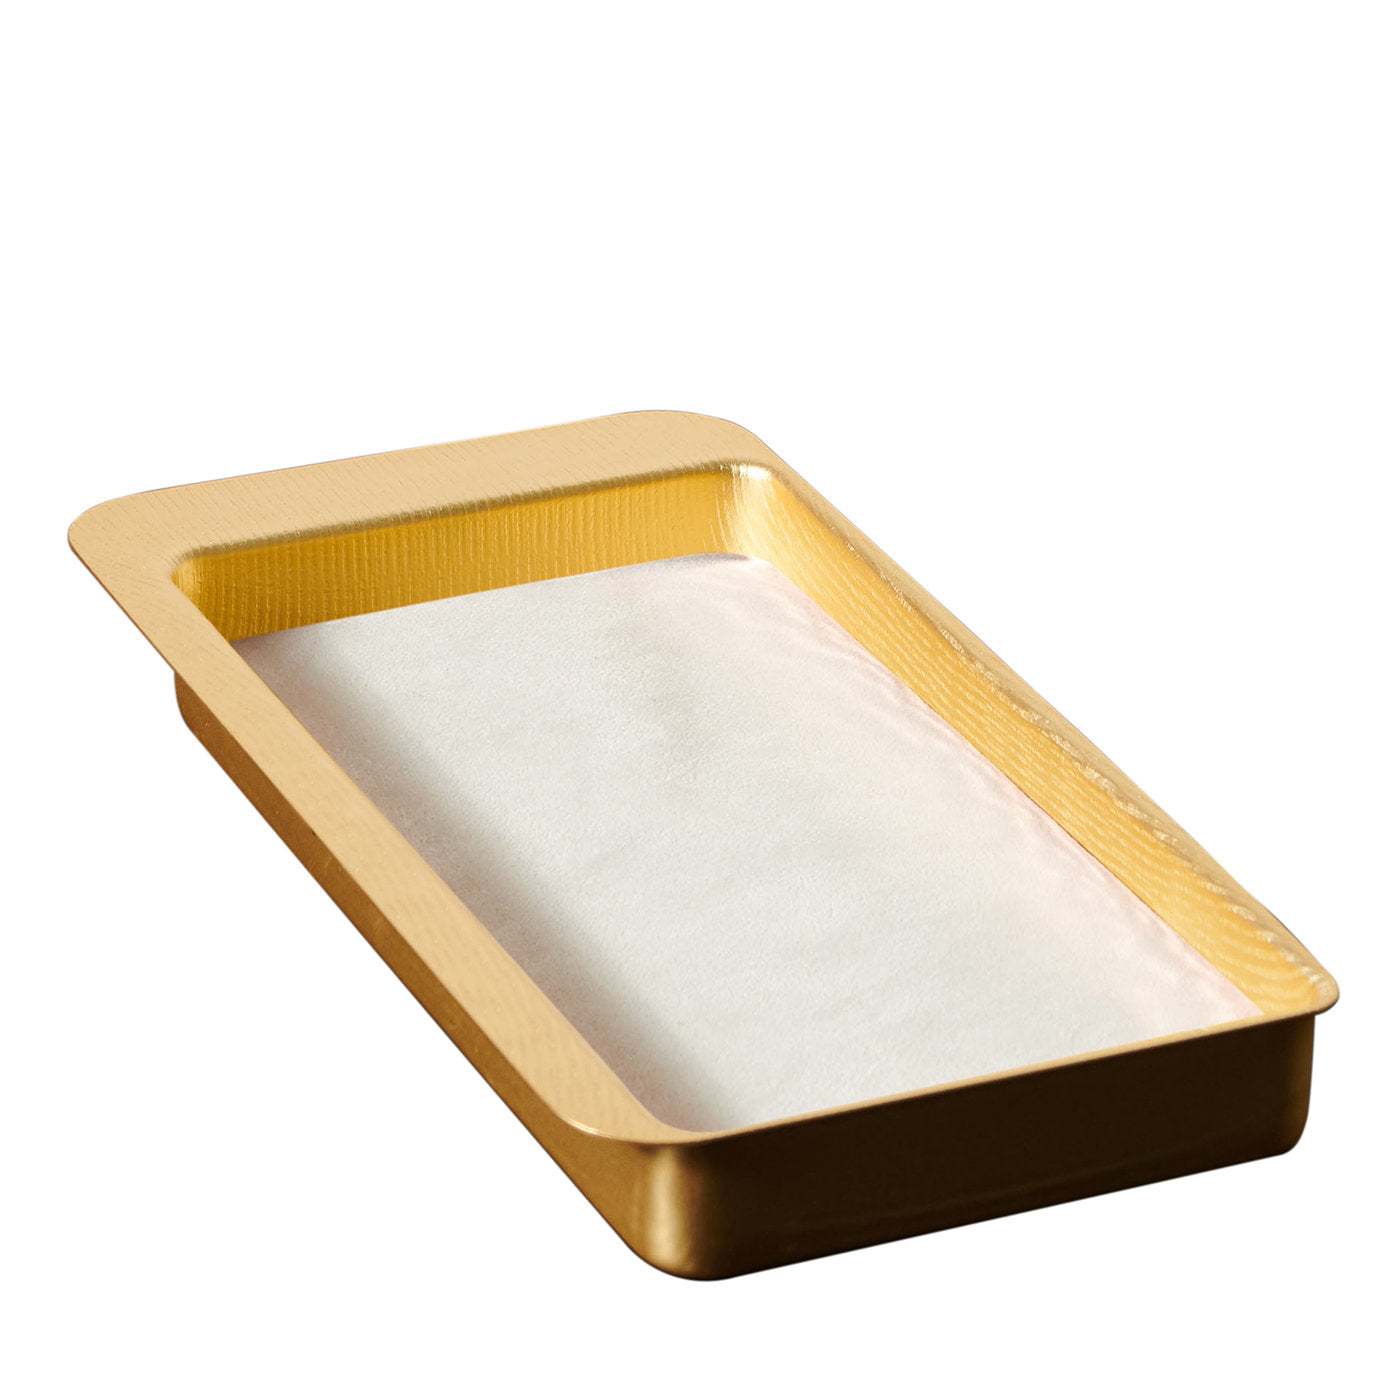 Firenze Rectangular Gold and Cream White Empty Pocket Tray - Main view